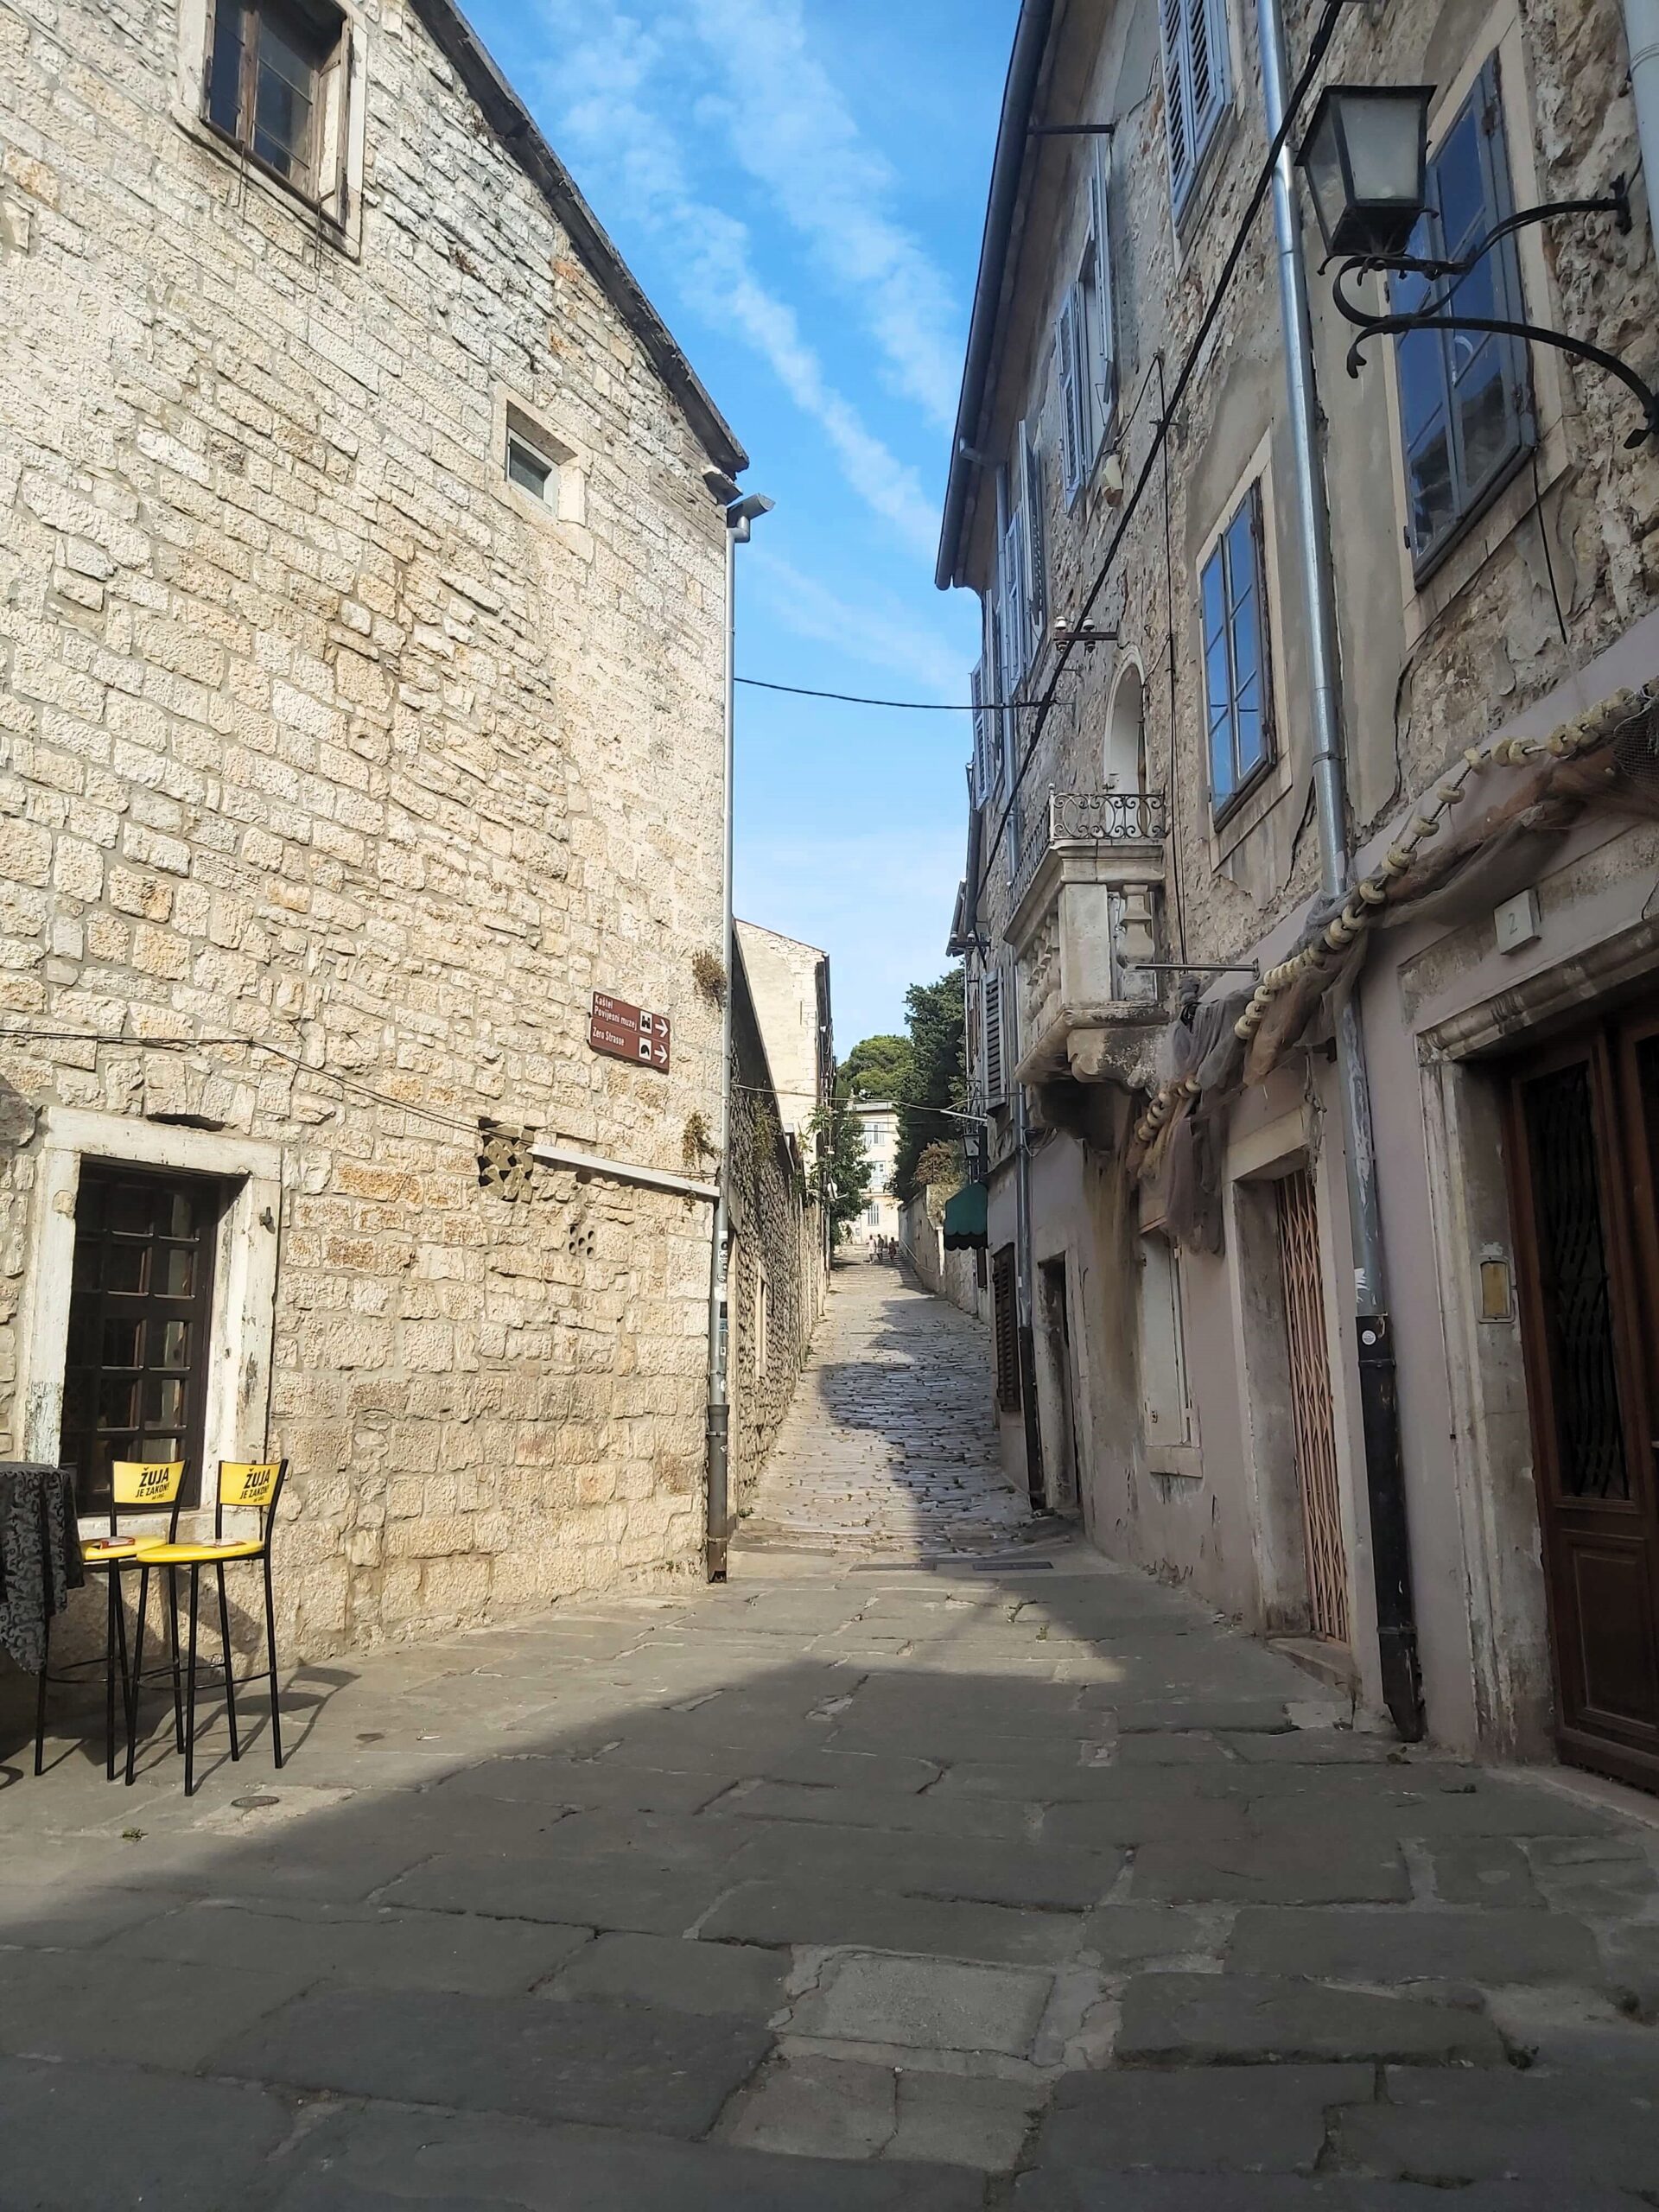 Old street view in Pula, Croatia